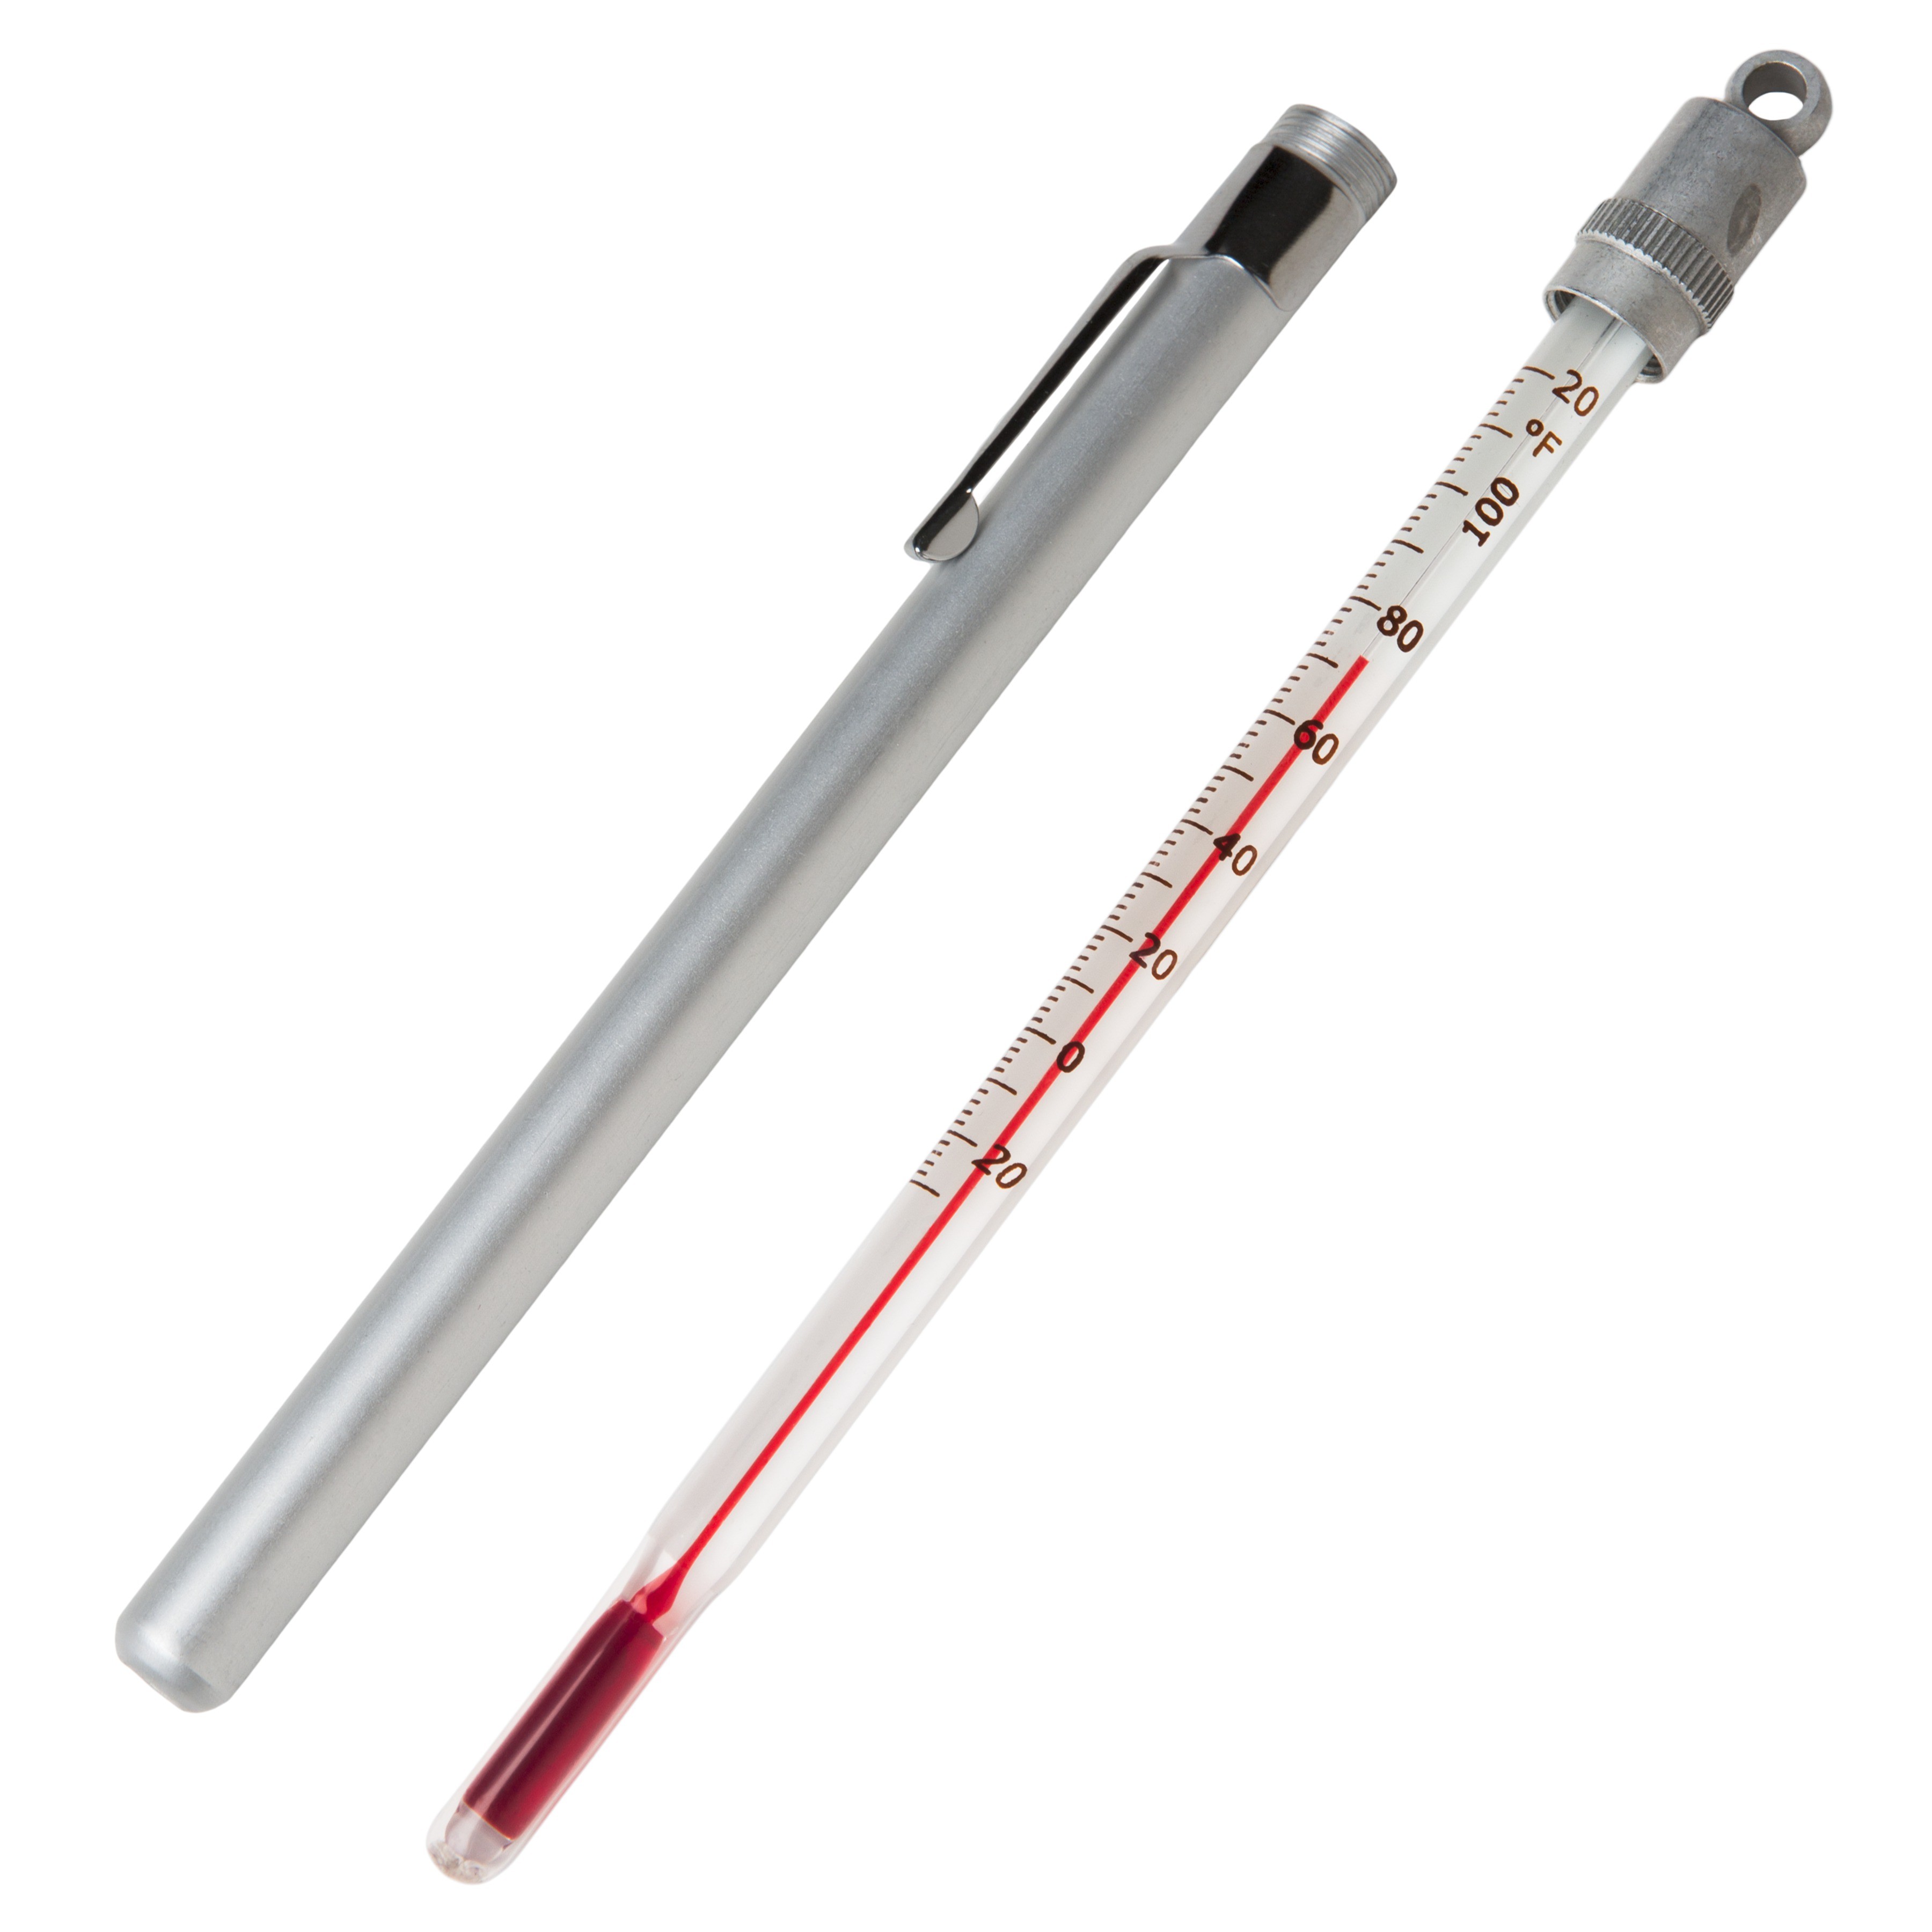 H-B DURAC Asphalt Test Liquid-In-Glass Thermometer; Total Immersion, Organic Liquid Fill